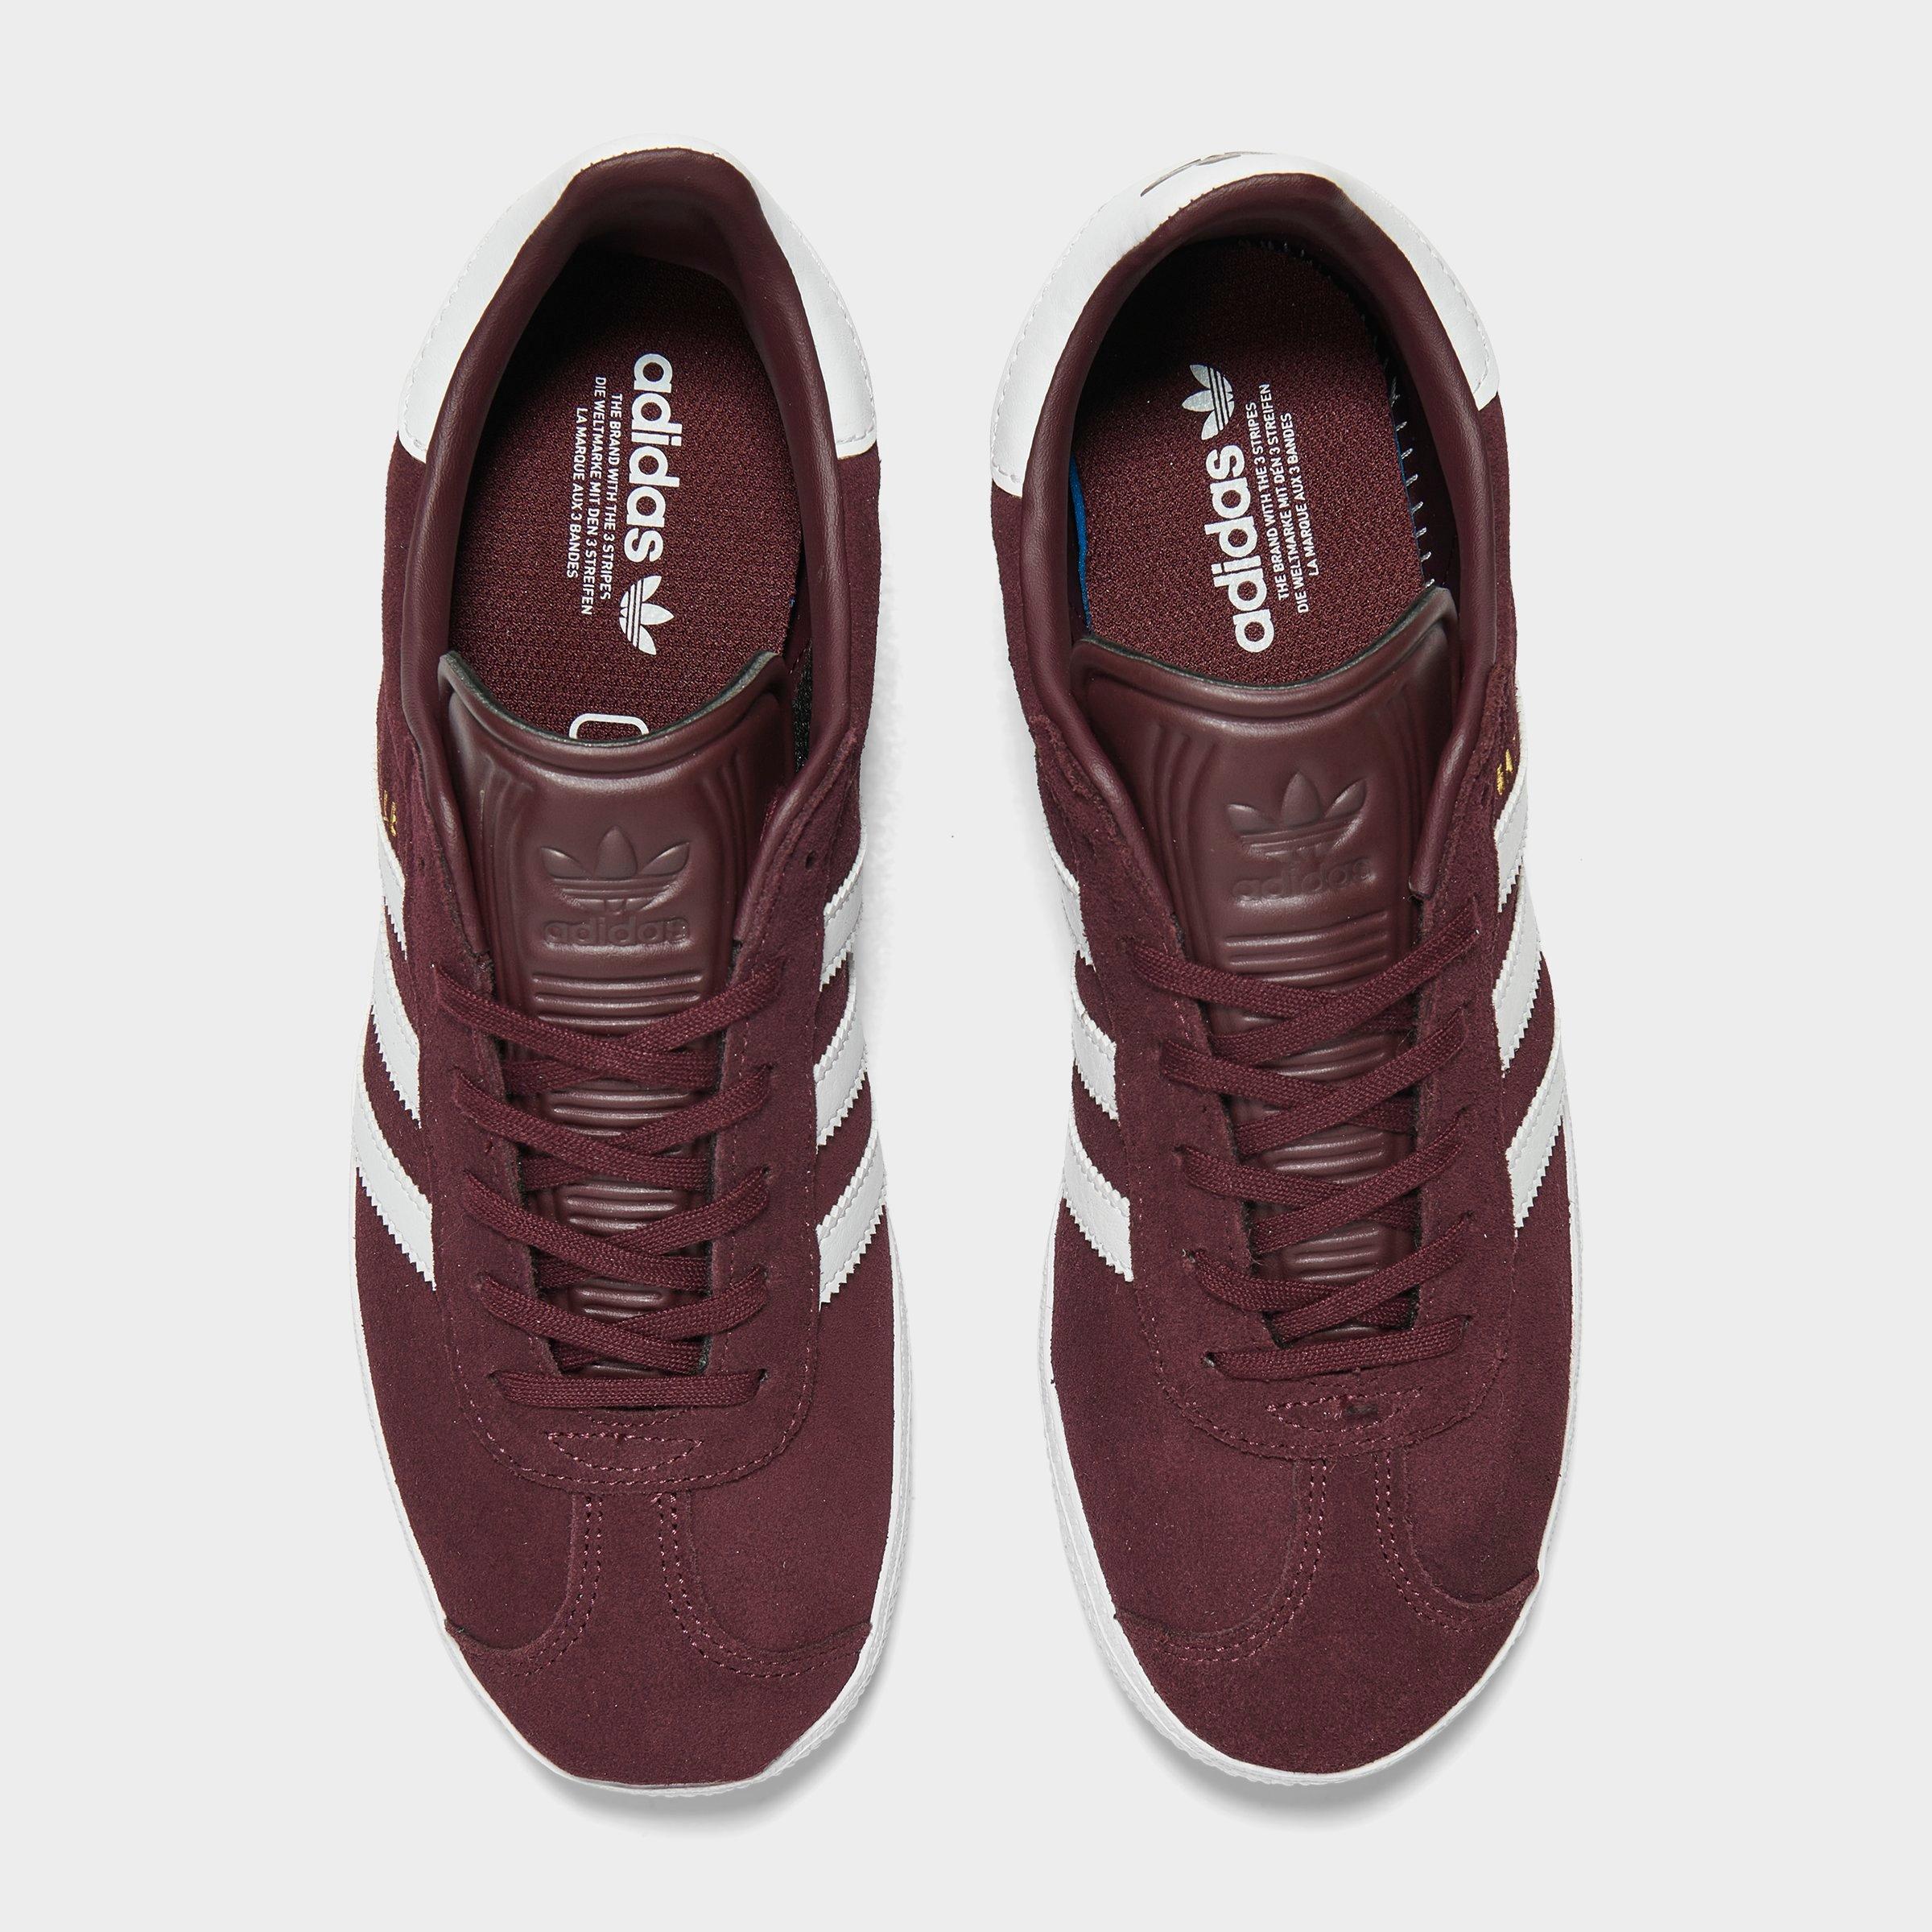 adidas gazelle burgundy size 6